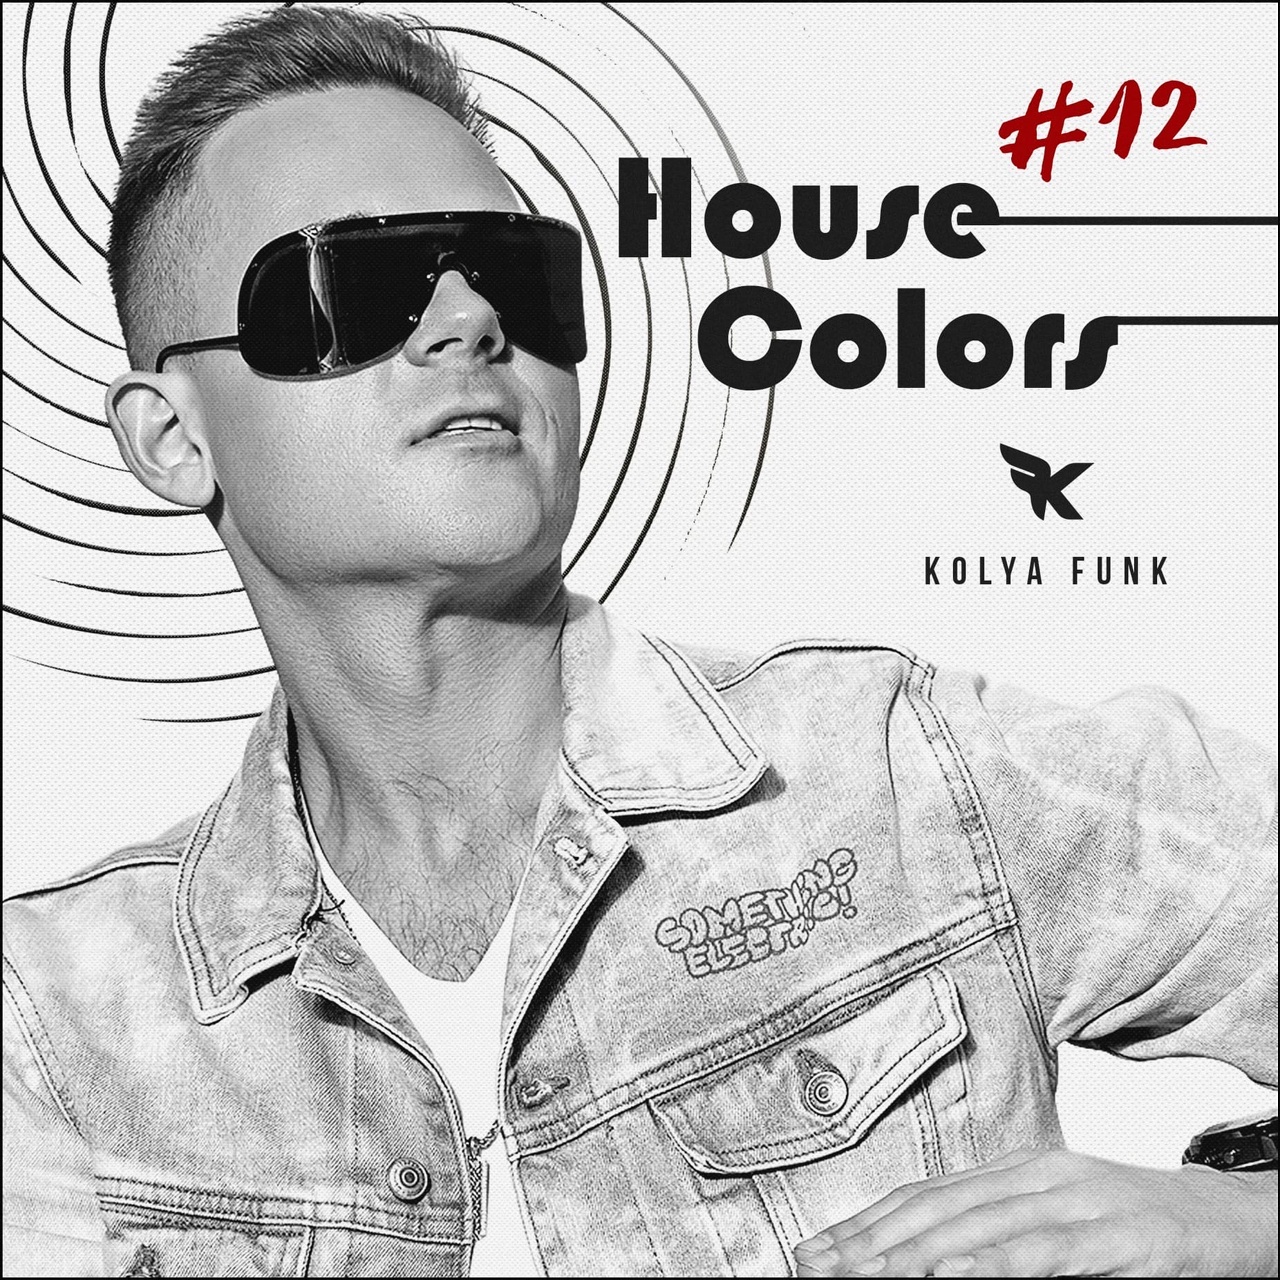 डाउनलोड करा Kolya Funk - House Colors #012